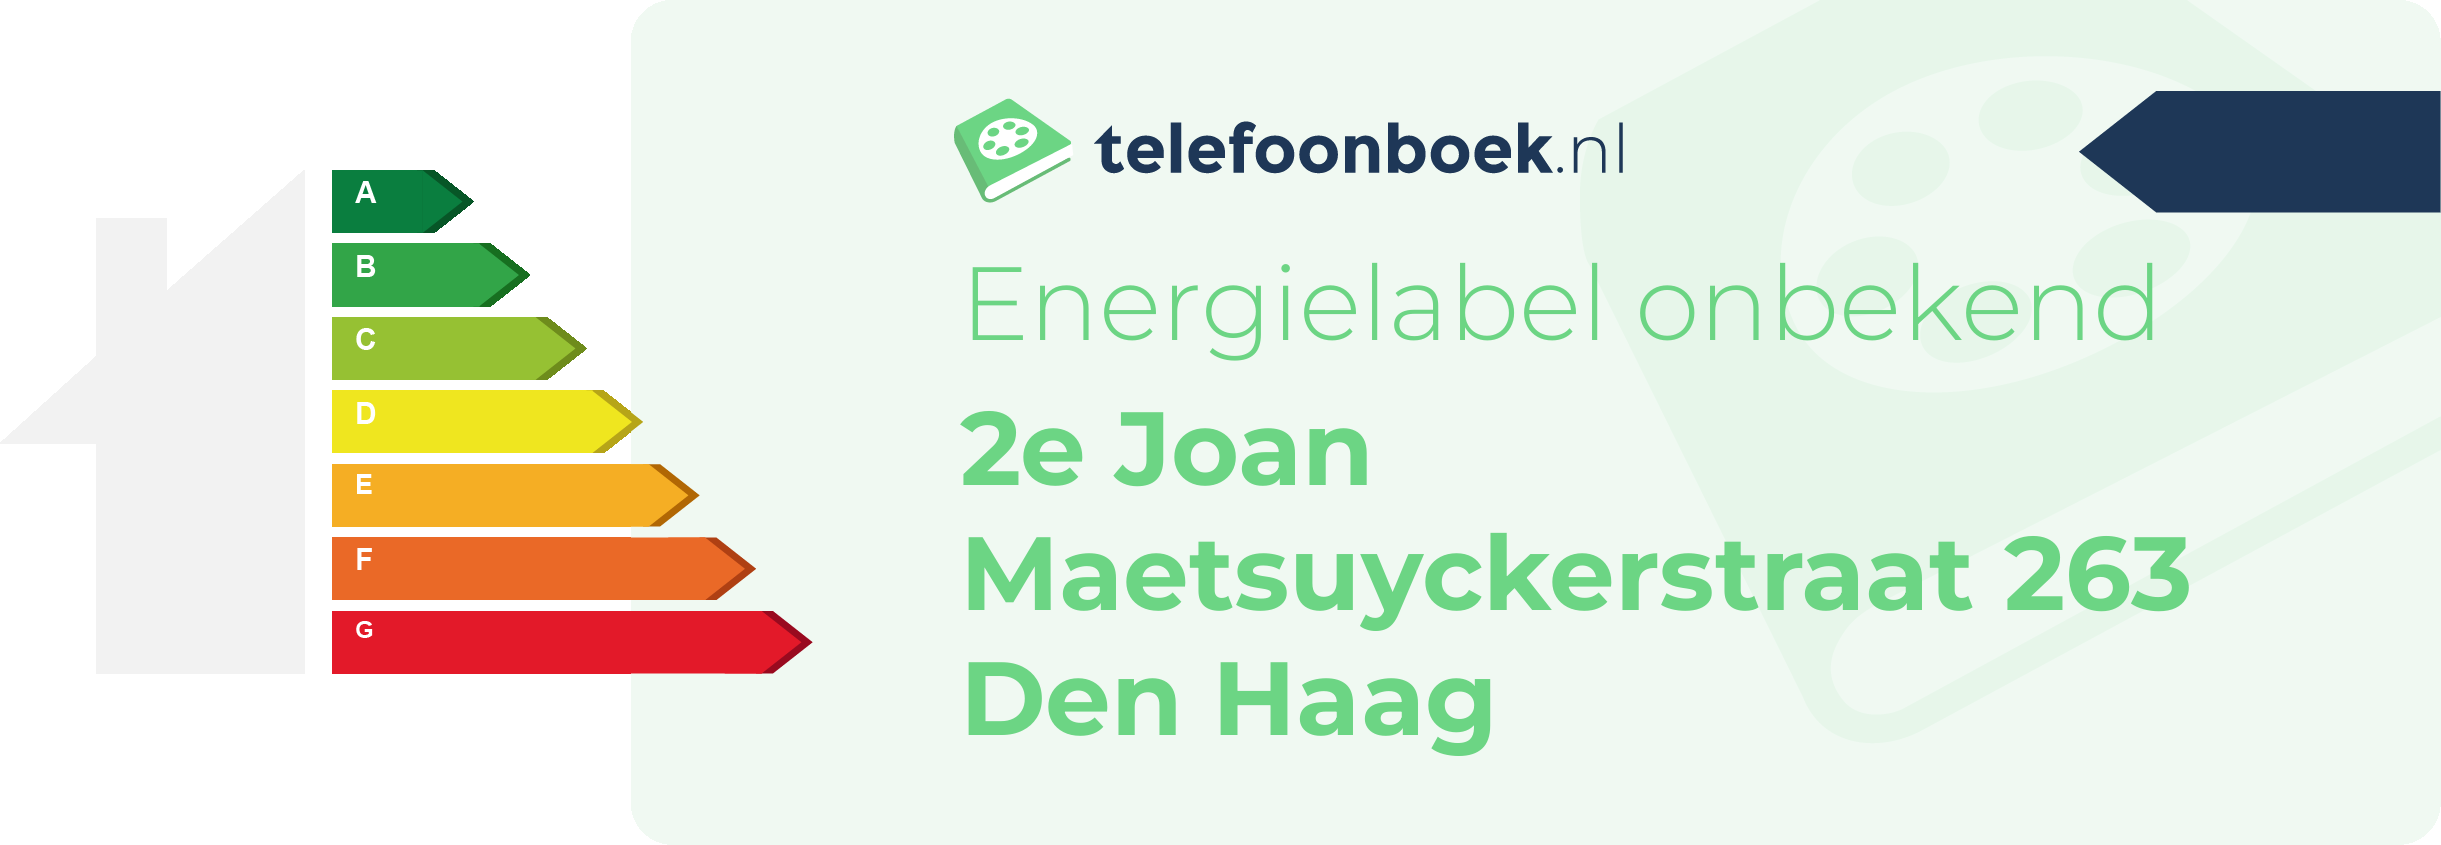 Energielabel 2e Joan Maetsuyckerstraat 263 Den Haag